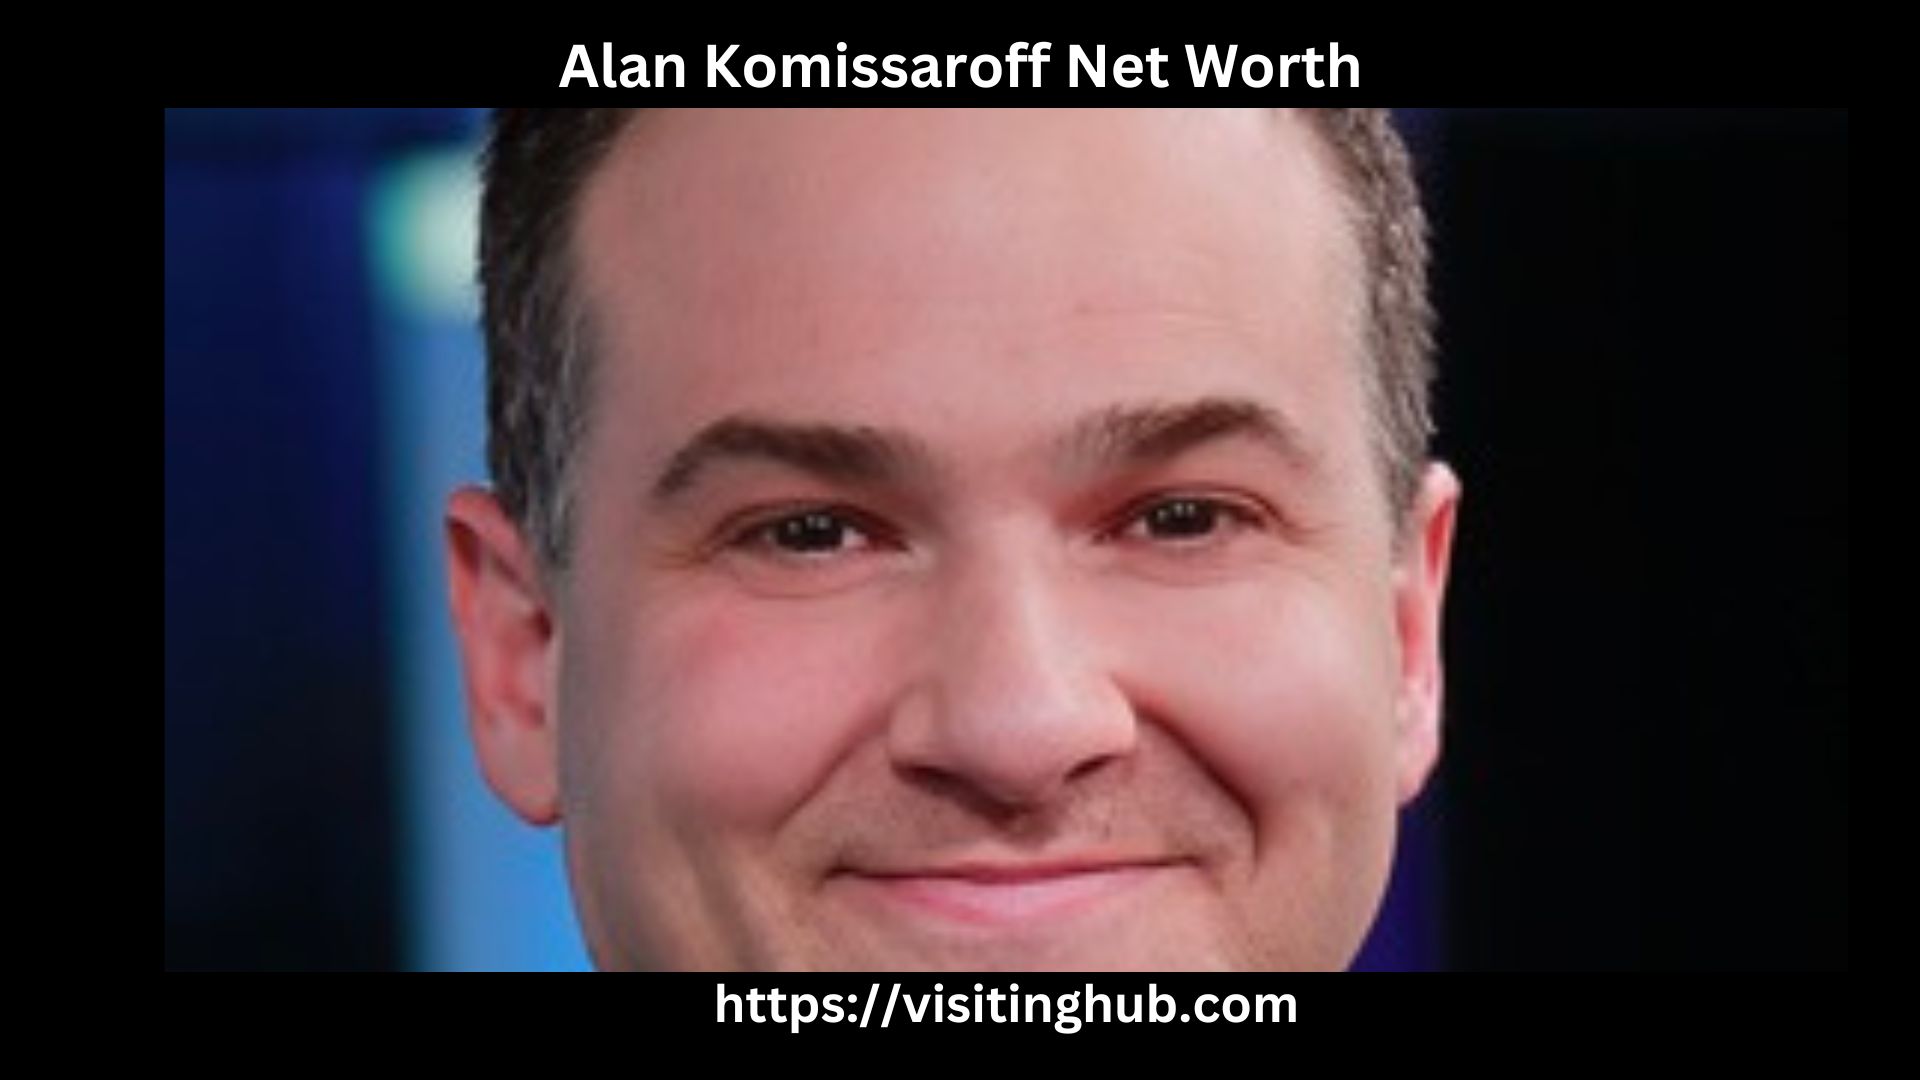 Alan Komissaroff Net Worth